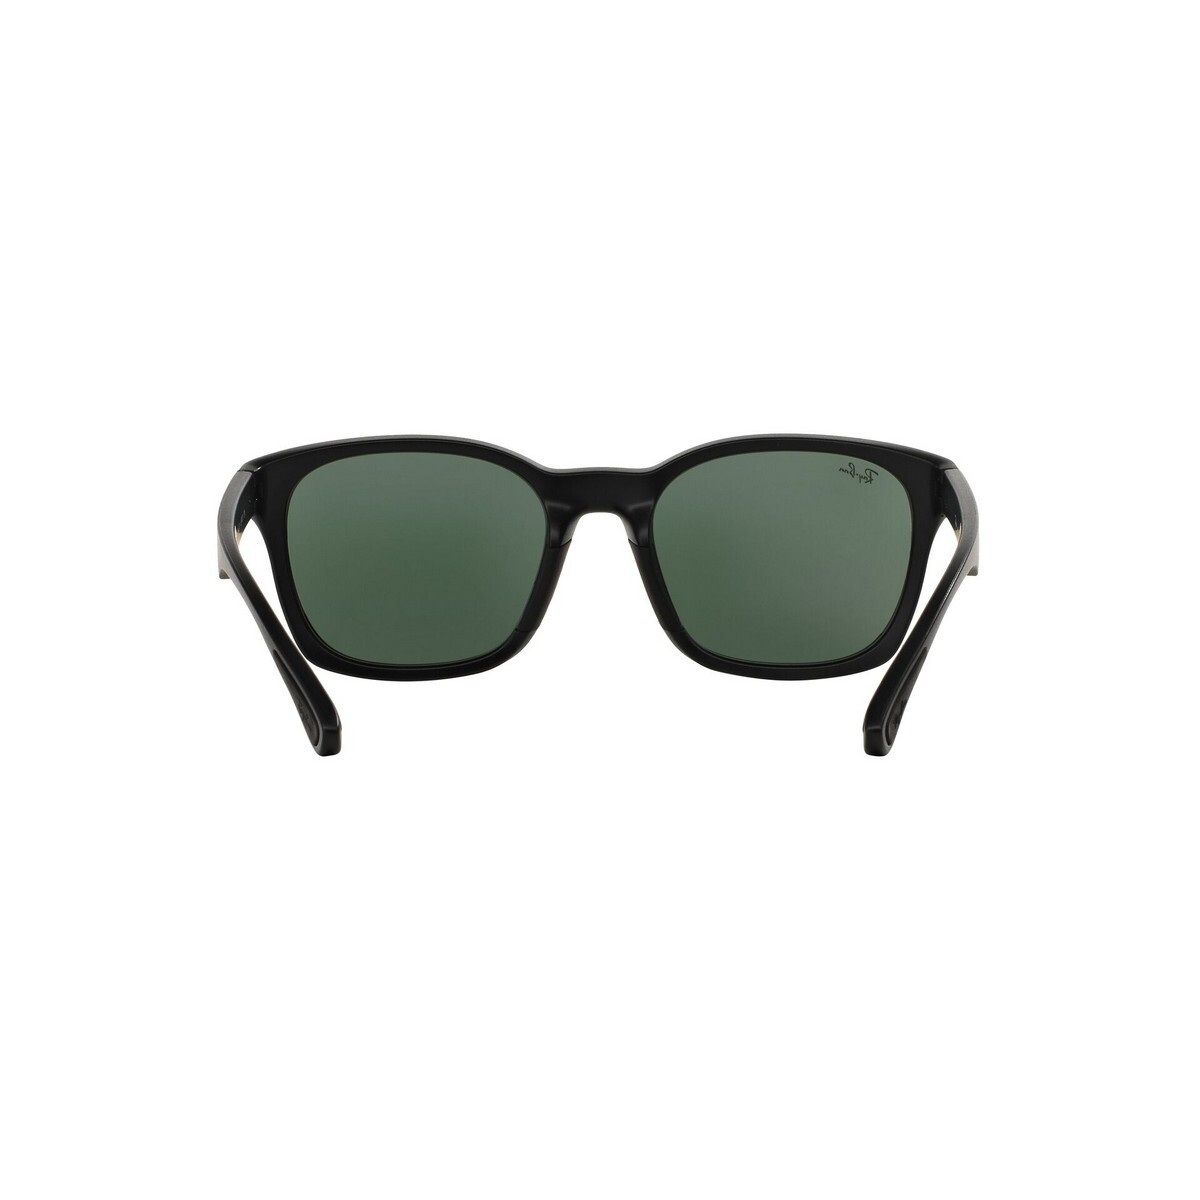 Rayban Mens Matte Black Frame With Green Lens Sunglass